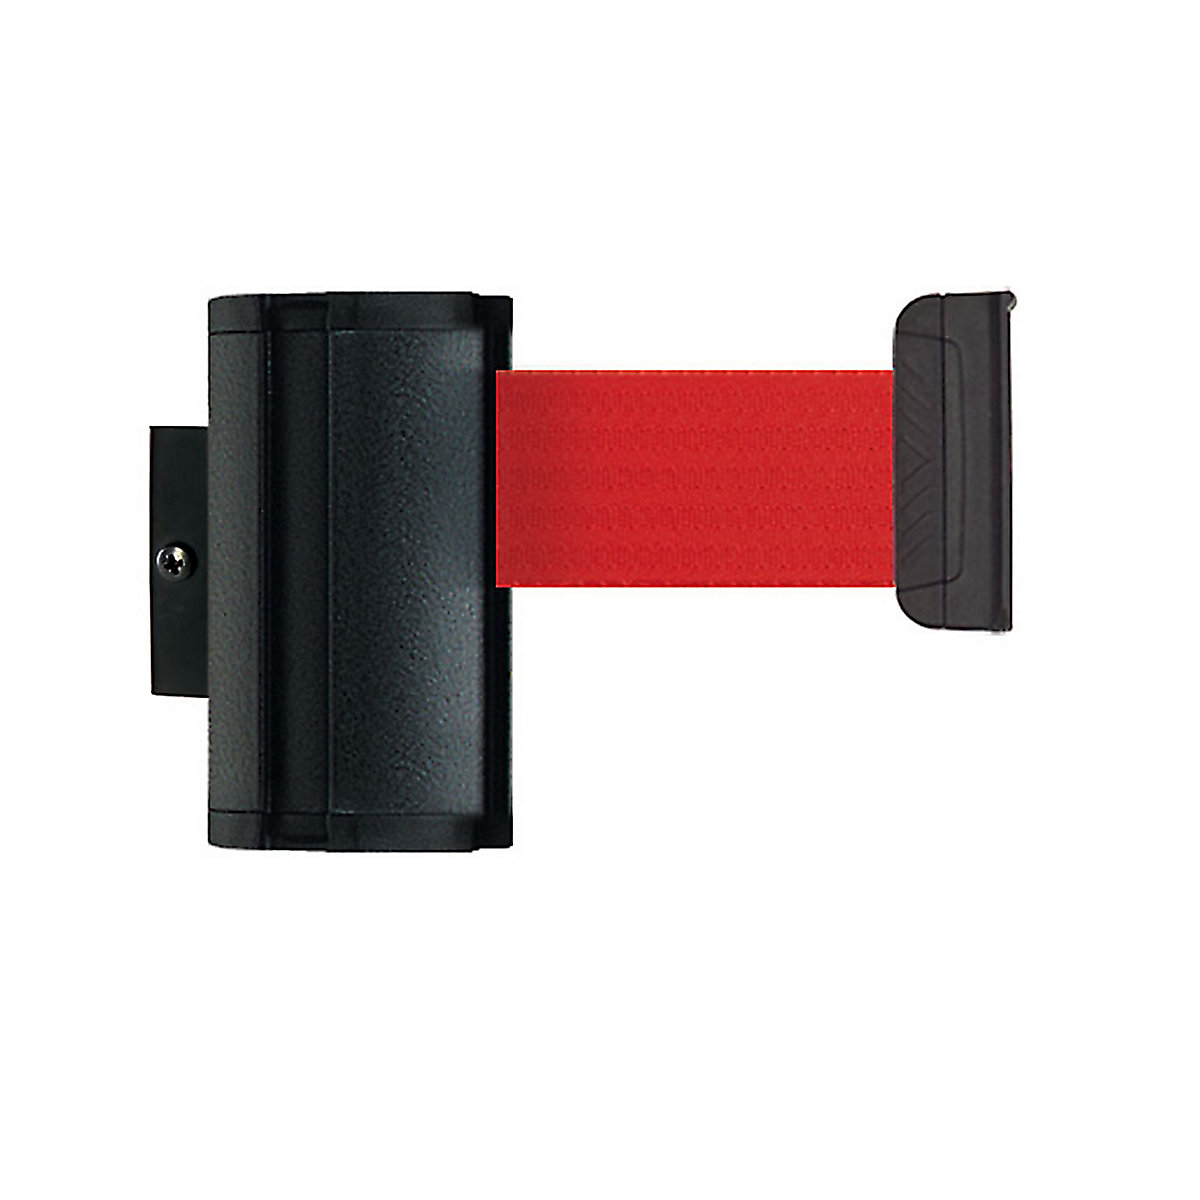 Bandcassette Wall Mount, uittreklengte max. 3700 mm, bandkleur rood